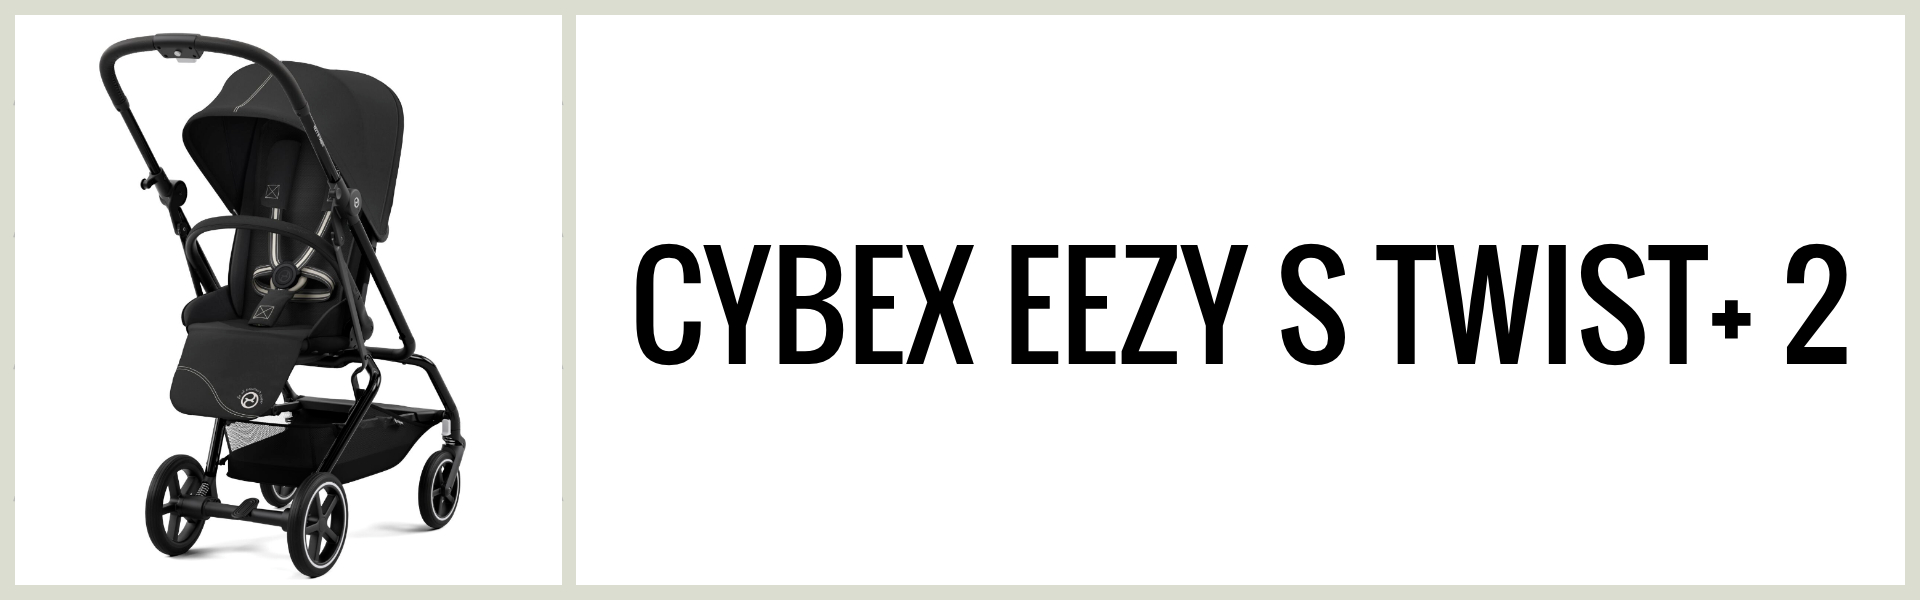 Omdöme: Hur är Cybex Eezy S Twist+ 2 som resevagn?